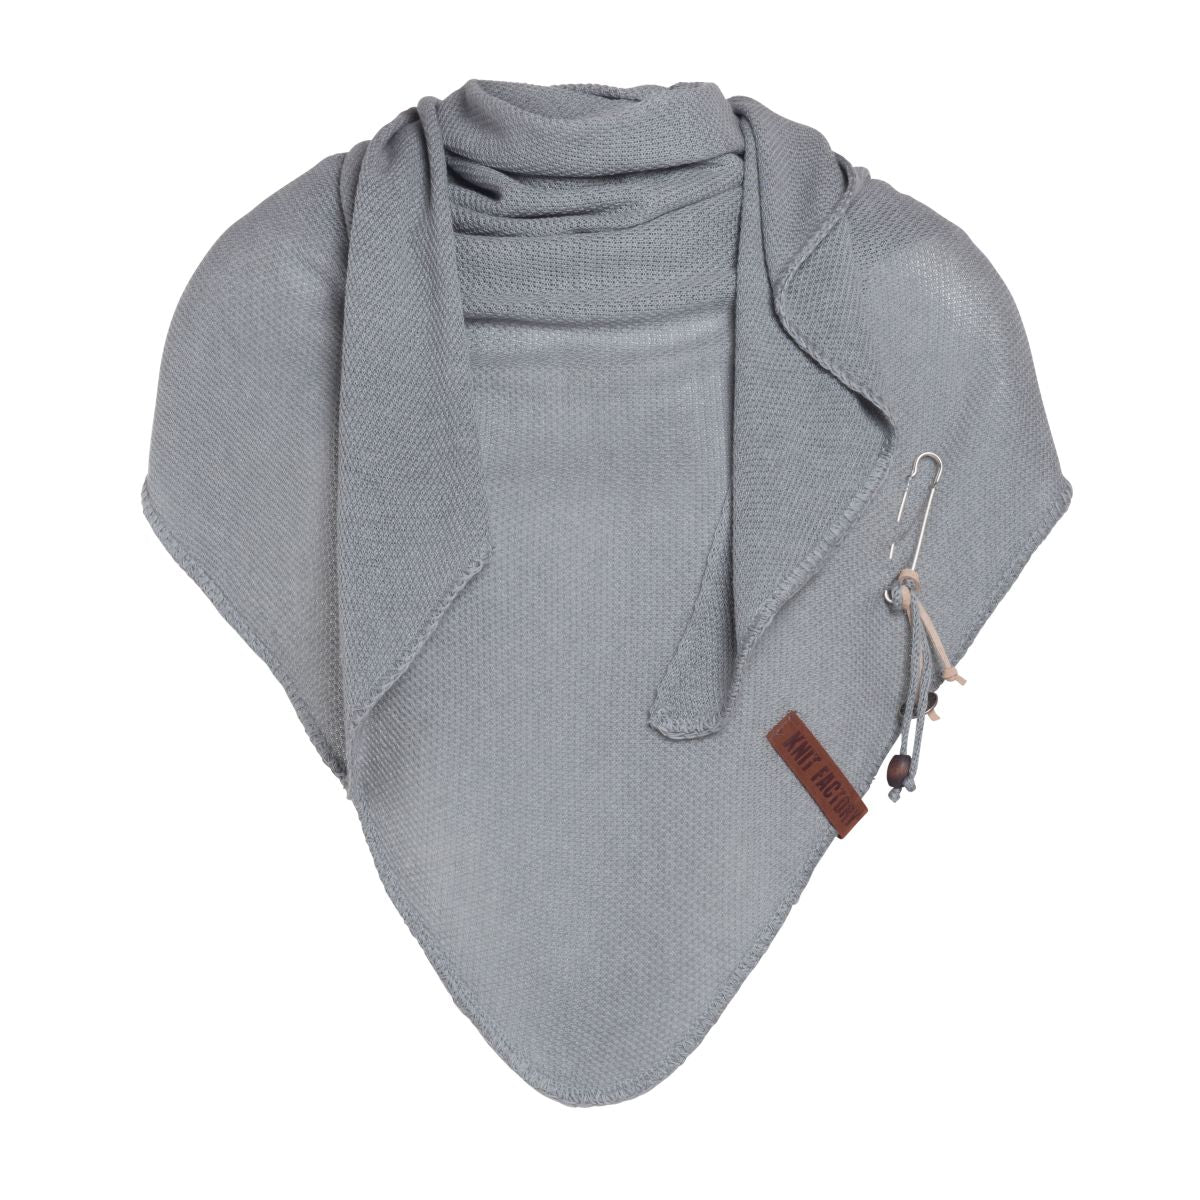 Knit factory | Lola triangle scarf light grey